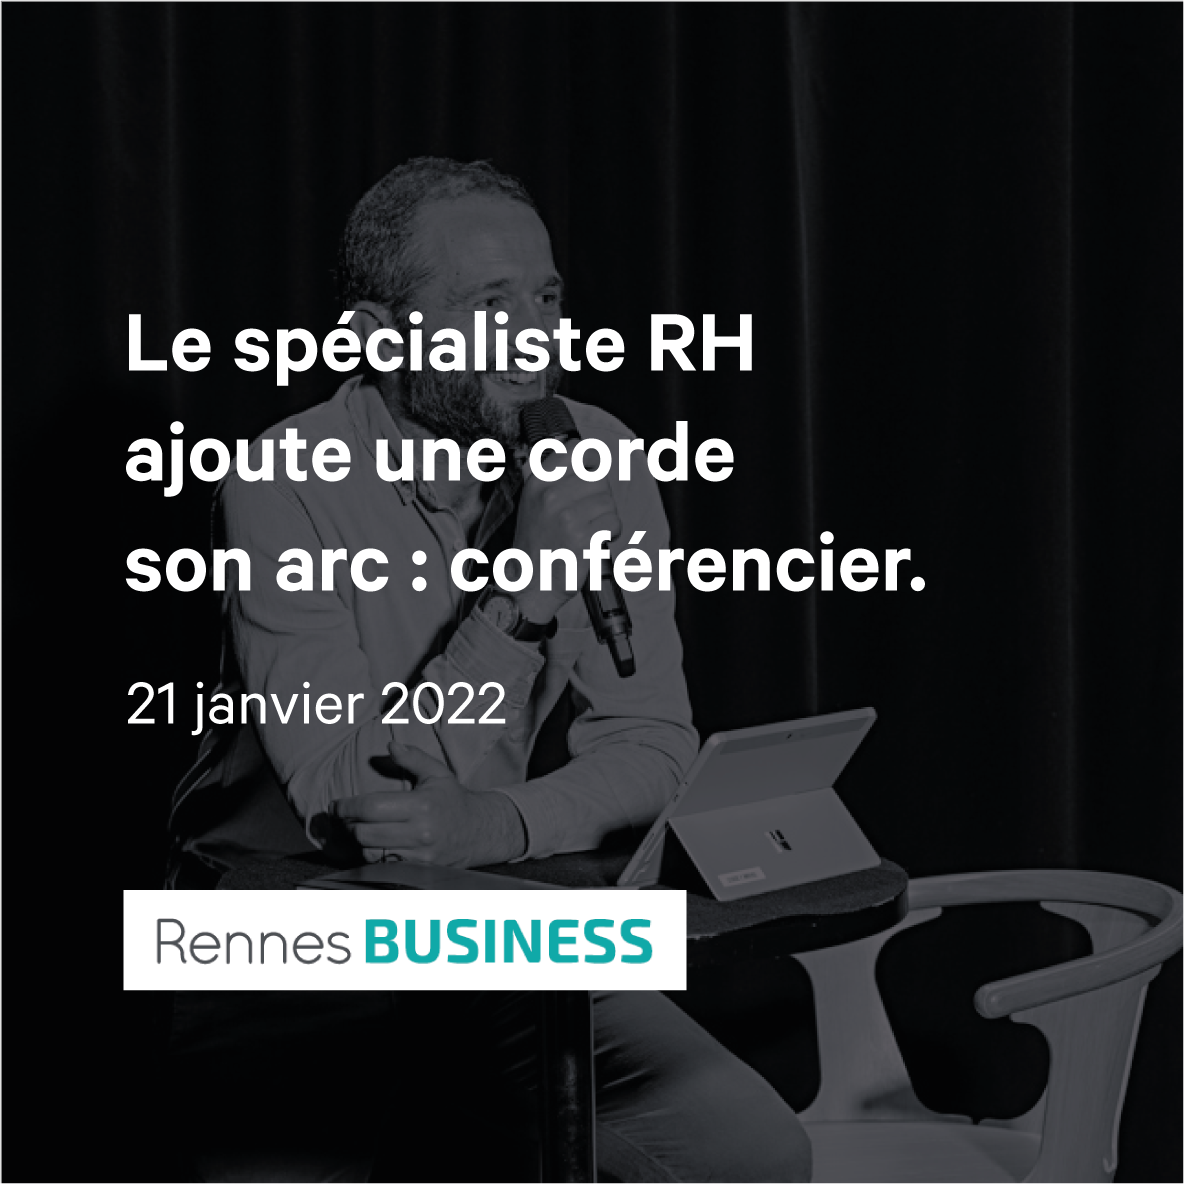 Rennes business mag - conférencier RH